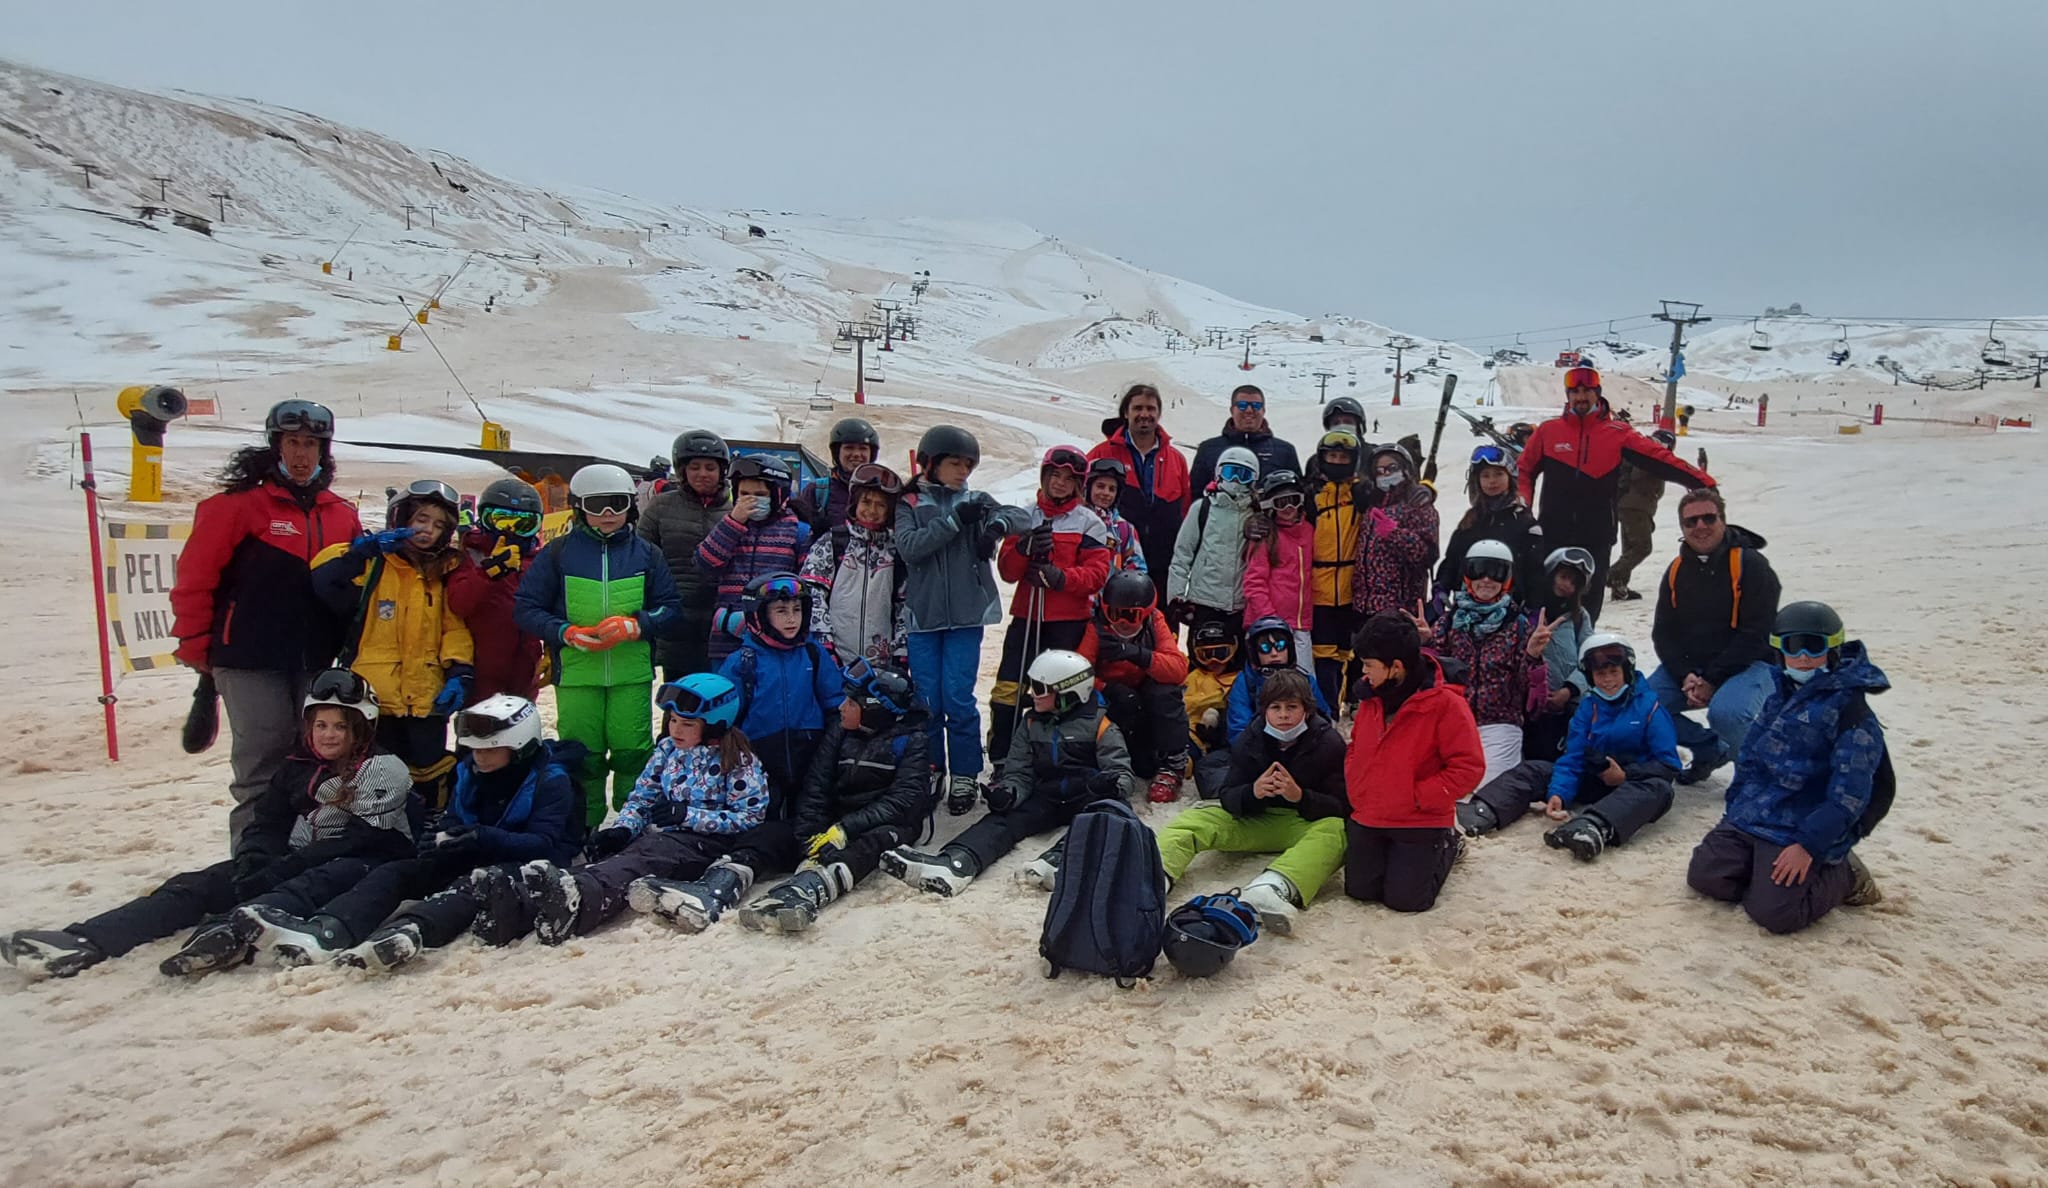 Más de 200 escolares de Monachil aprender a esquiar en Sierra Nevada gracias a un programa municipal